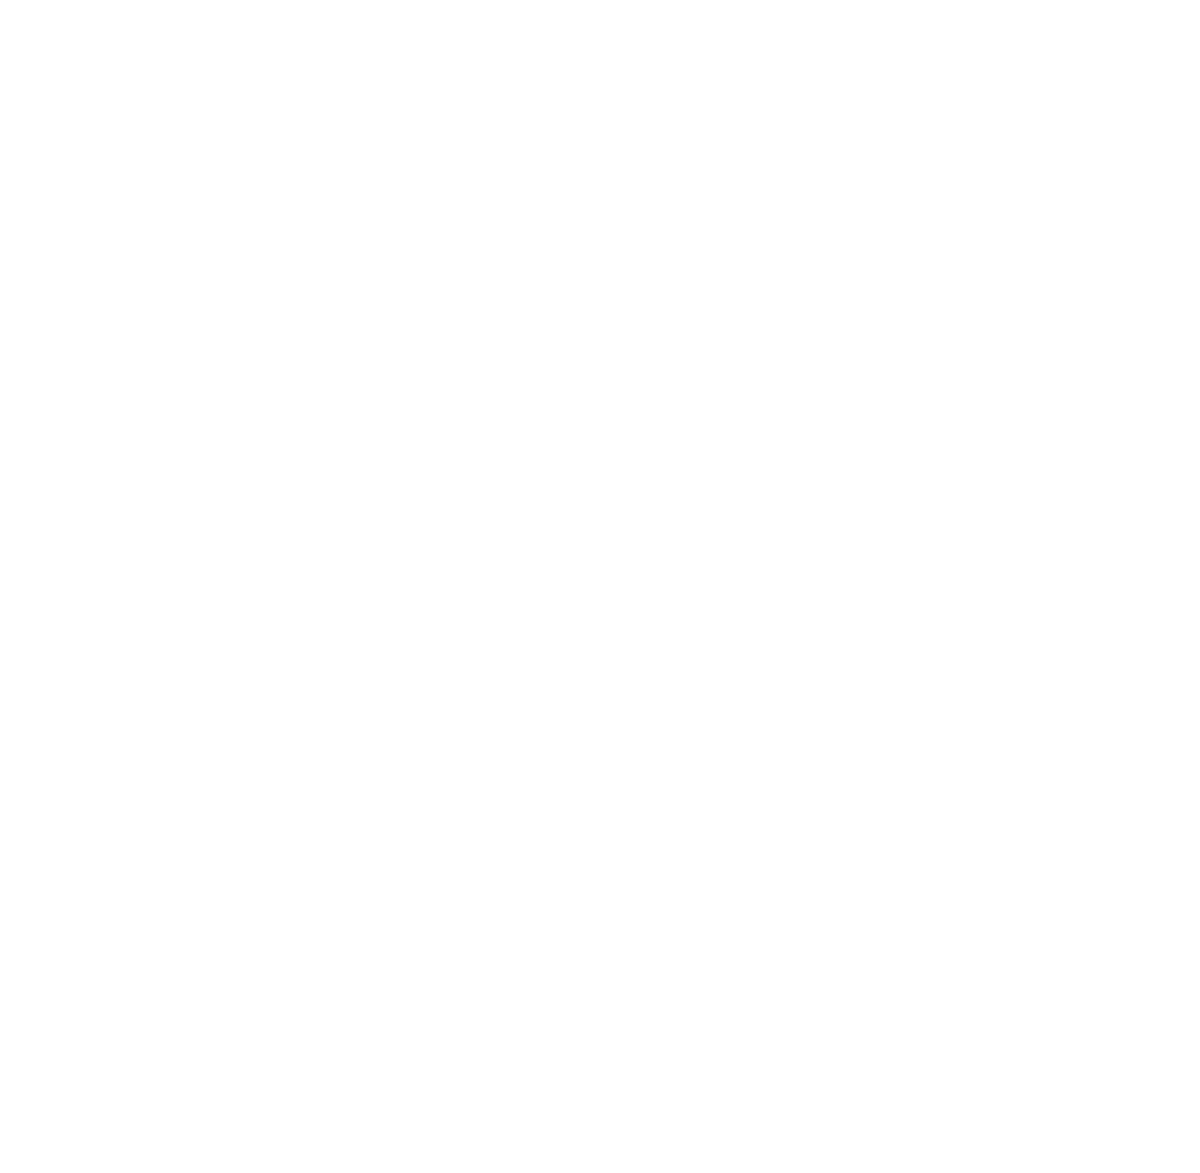 Decus Capital